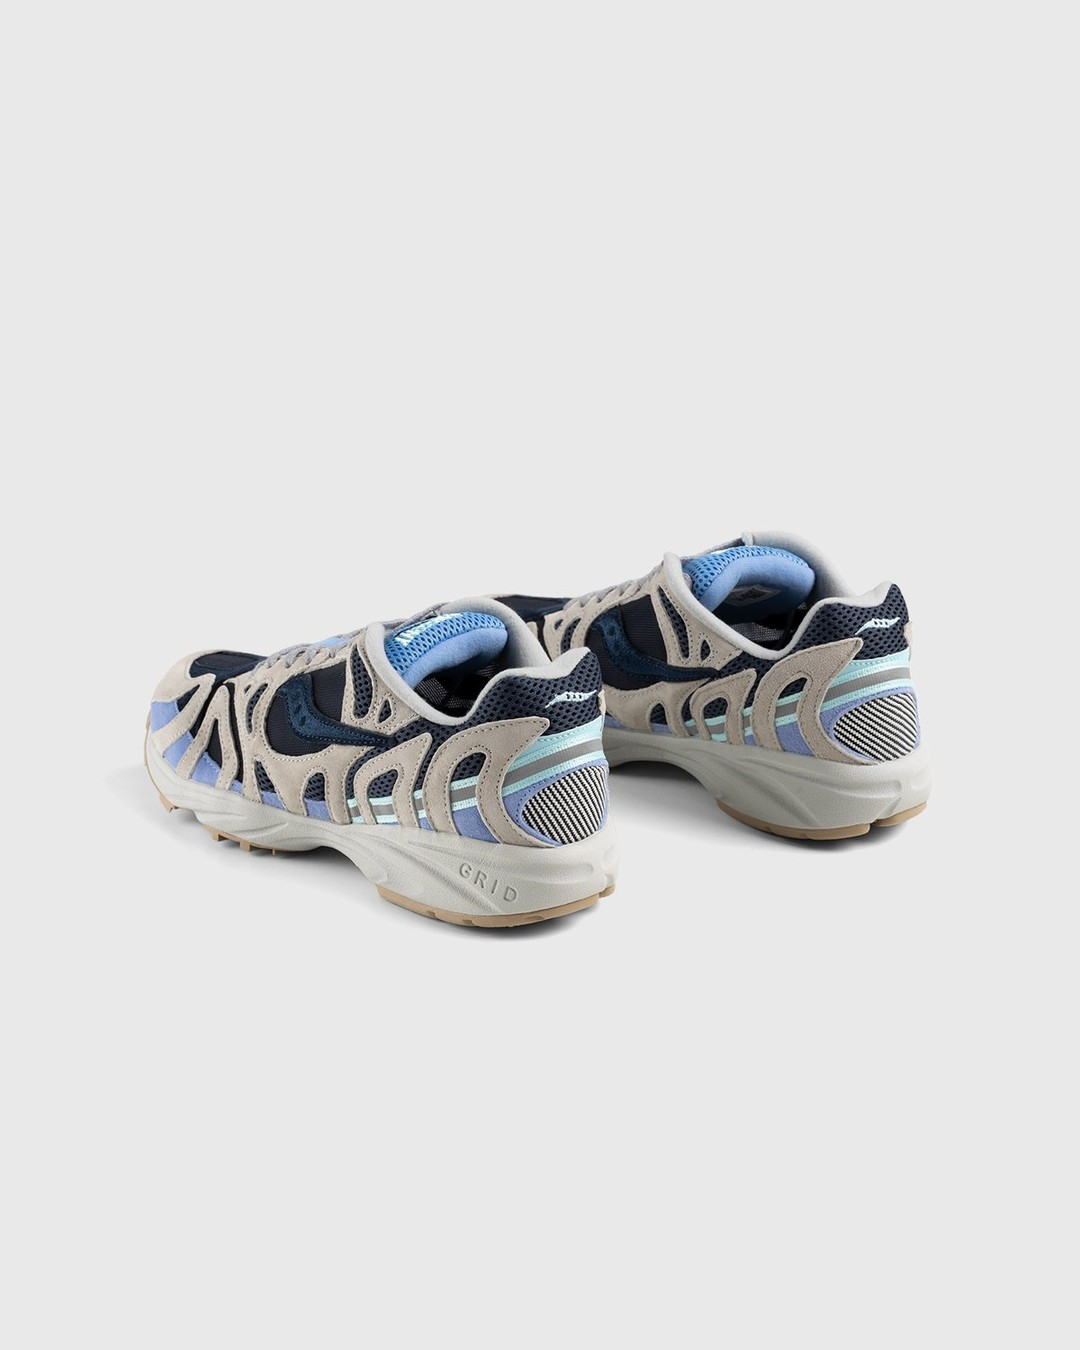 Saucony – Grid Azura 2000 Grey - Low Top Sneakers - Blue - Image 3